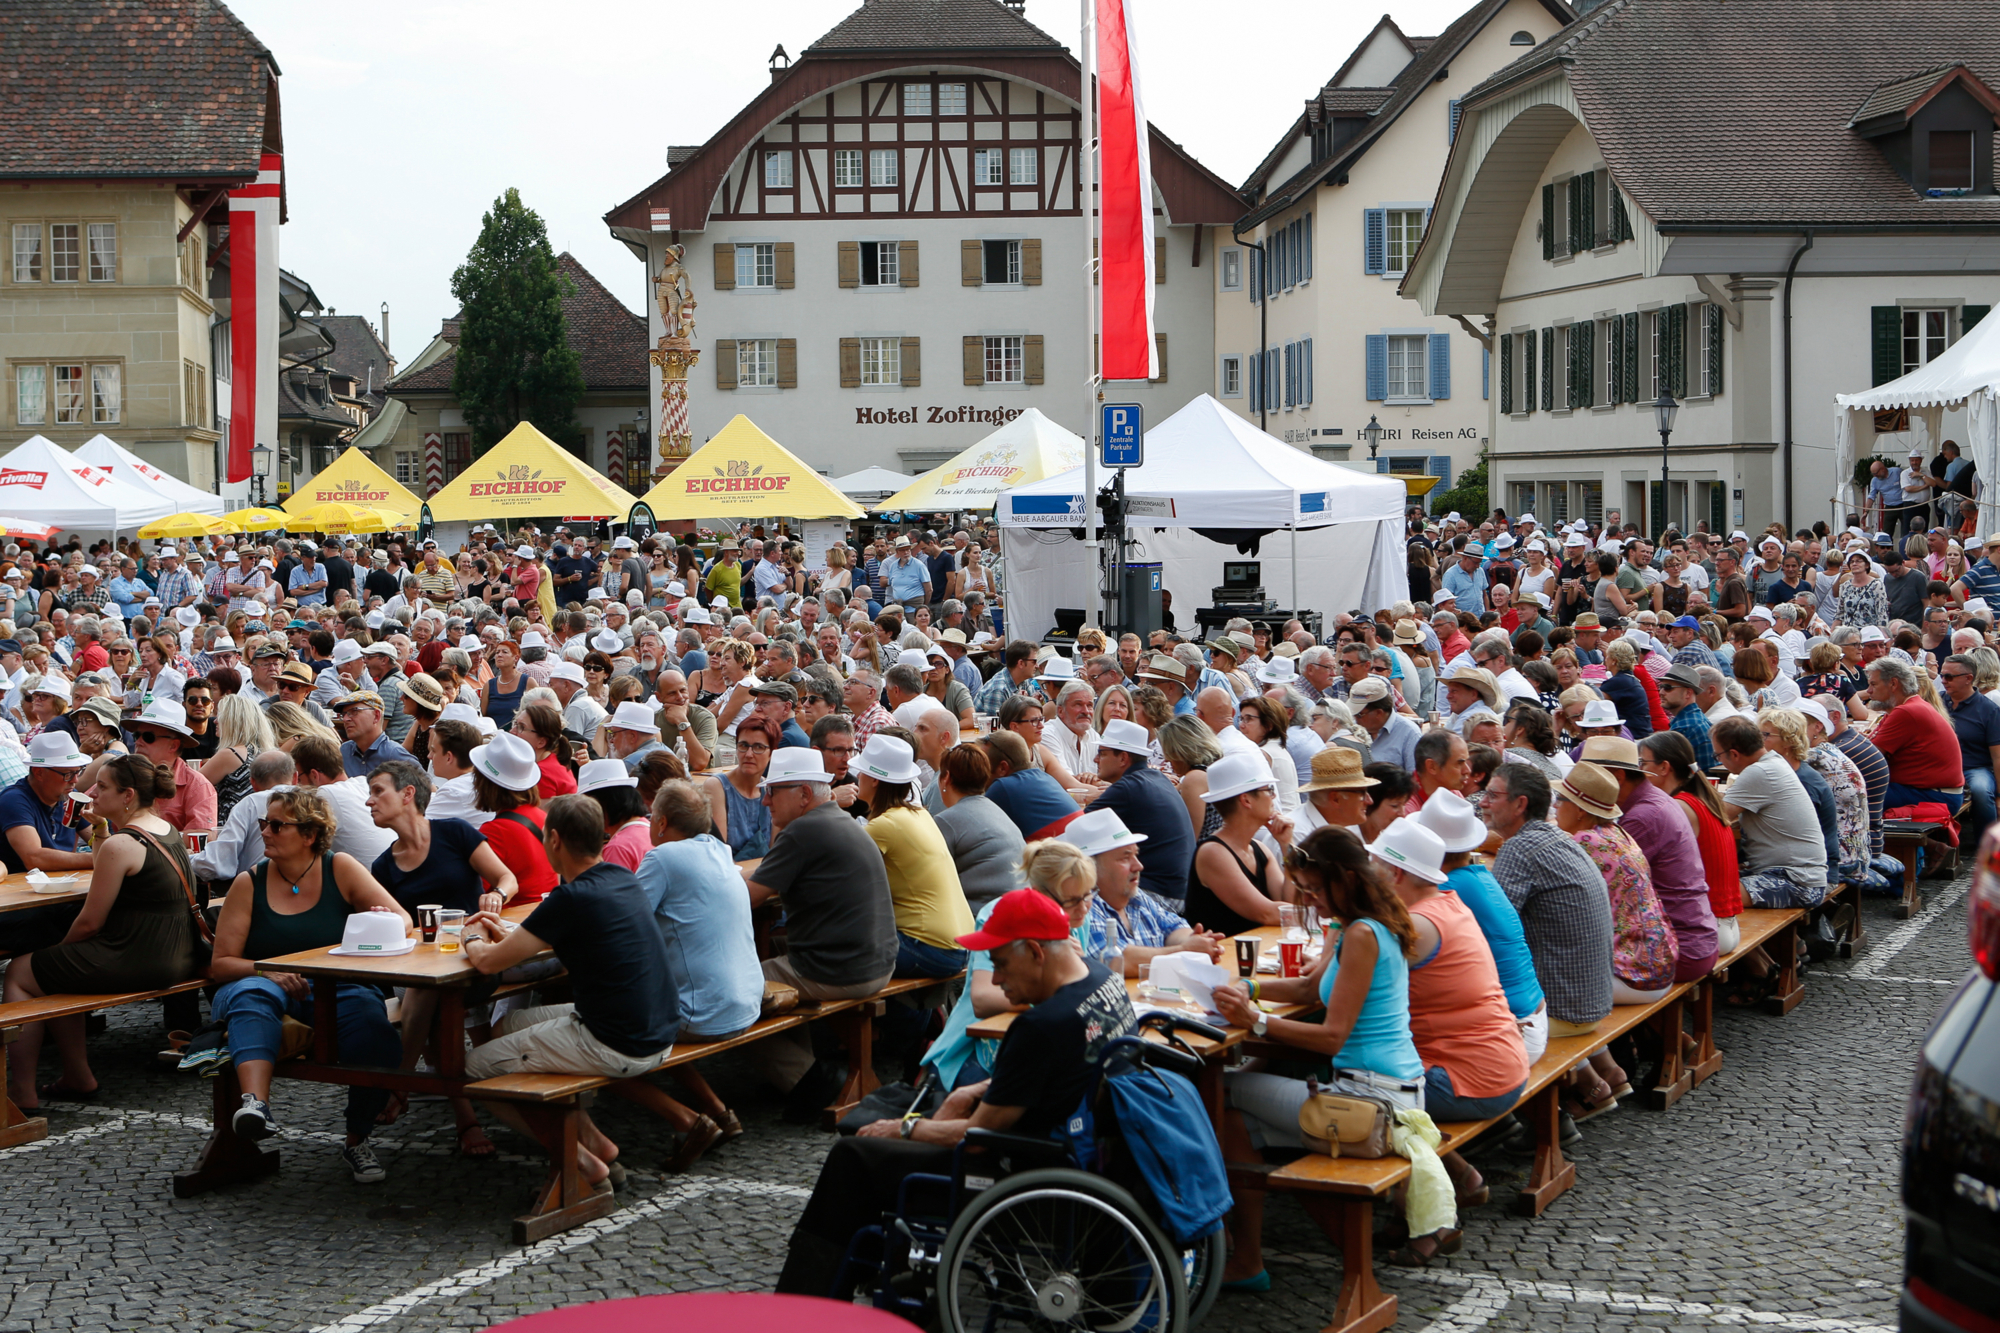 A festival like Zofingen has never been seen before